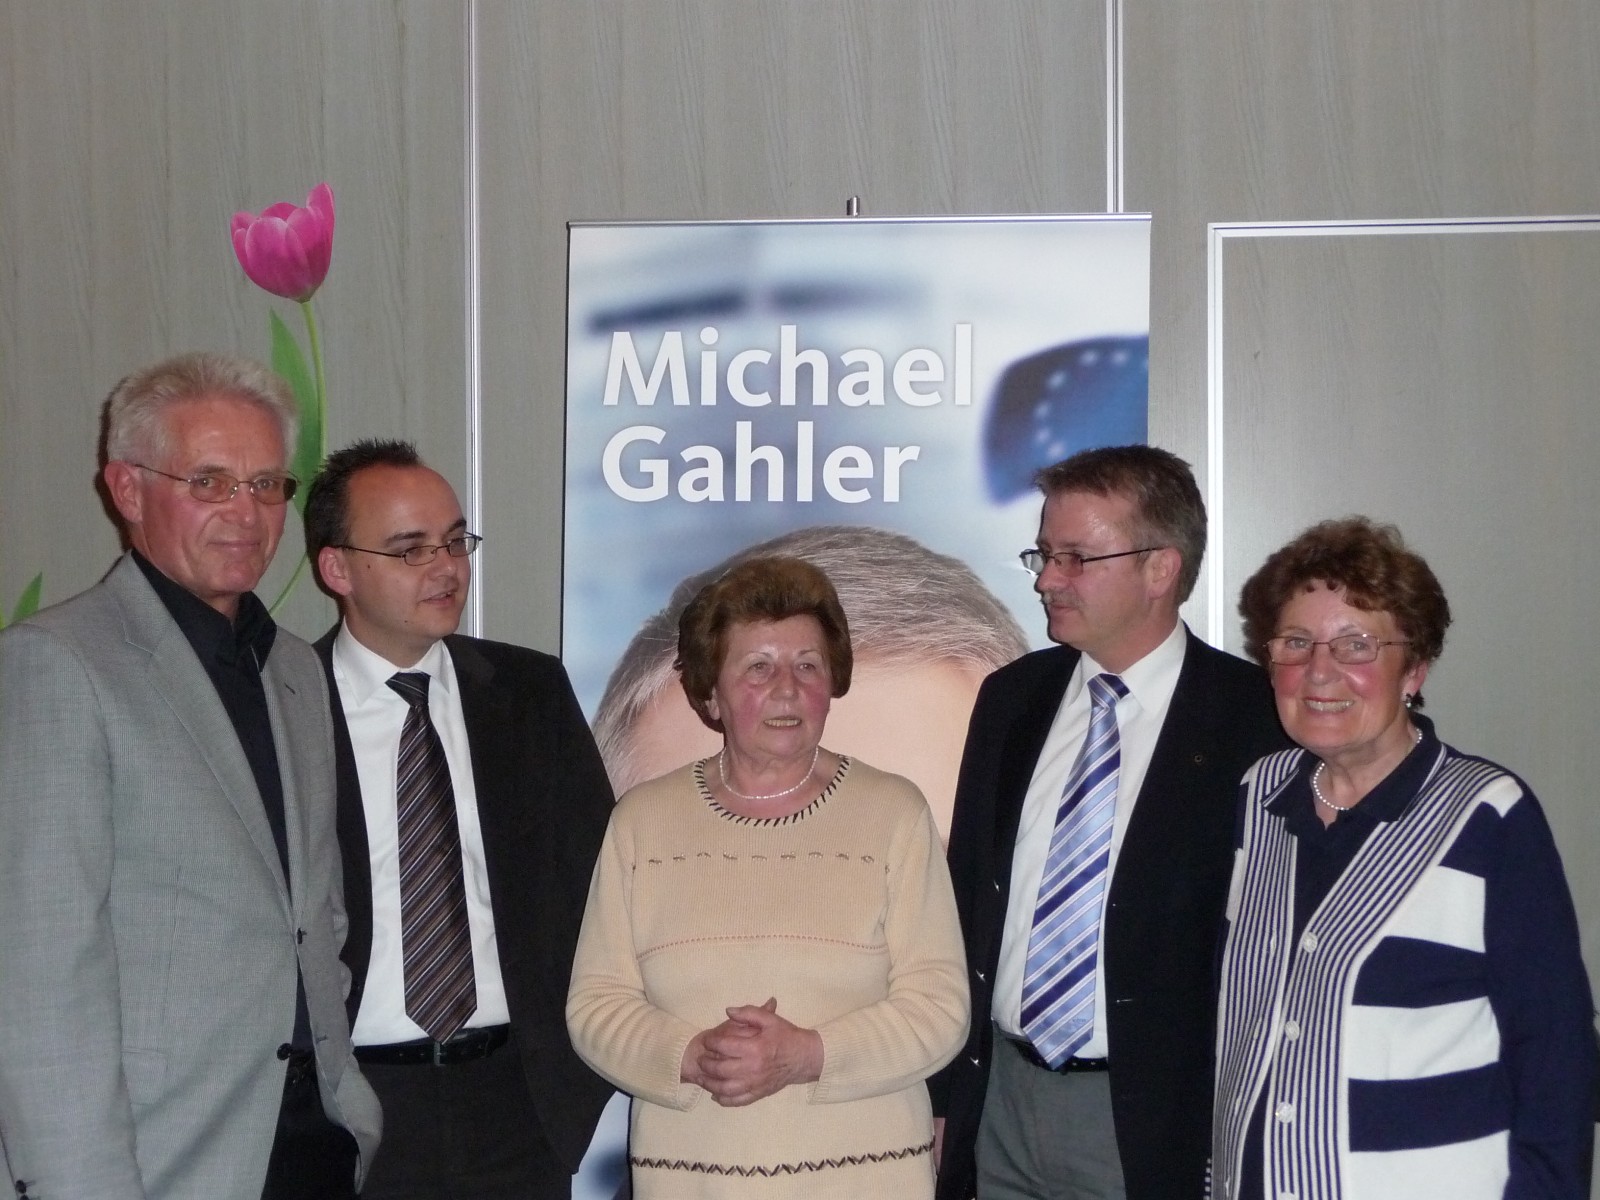 v.l.n.r.: Alfred Wiegand, Uwe Albert, Johanna Antlfinger, Michael Gahler, Helga Oehne